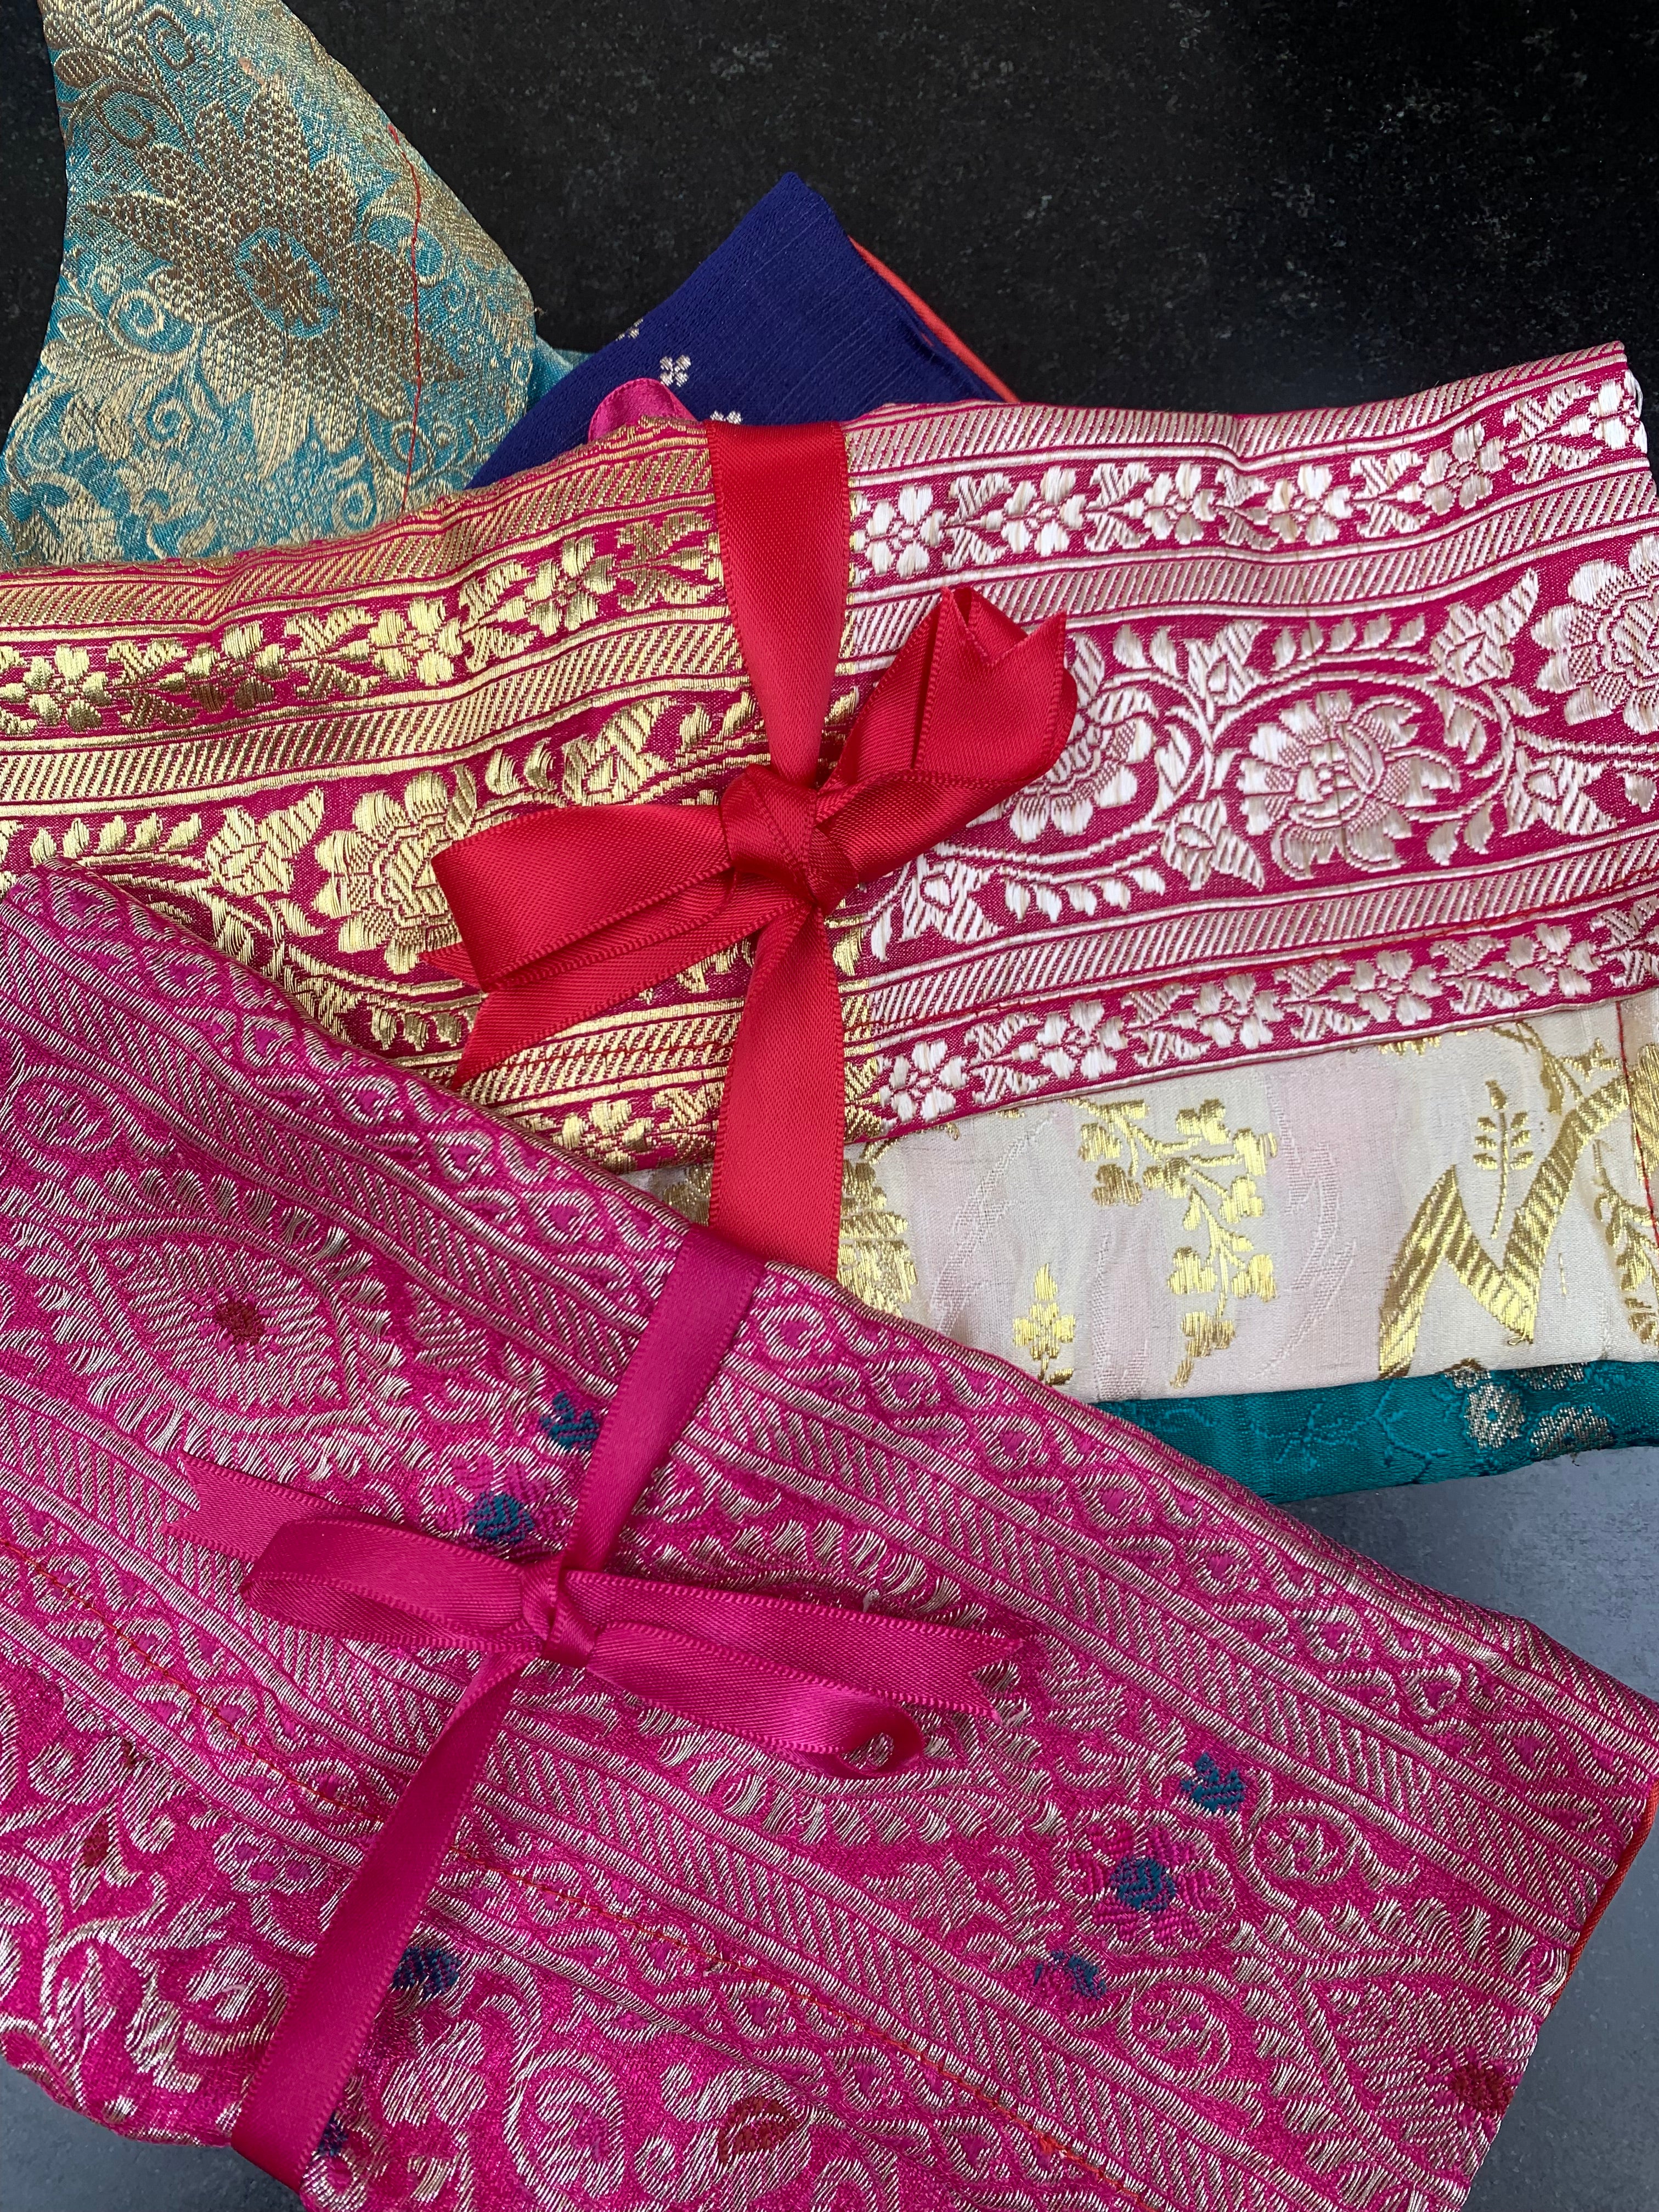 purses made from vintage silk saris